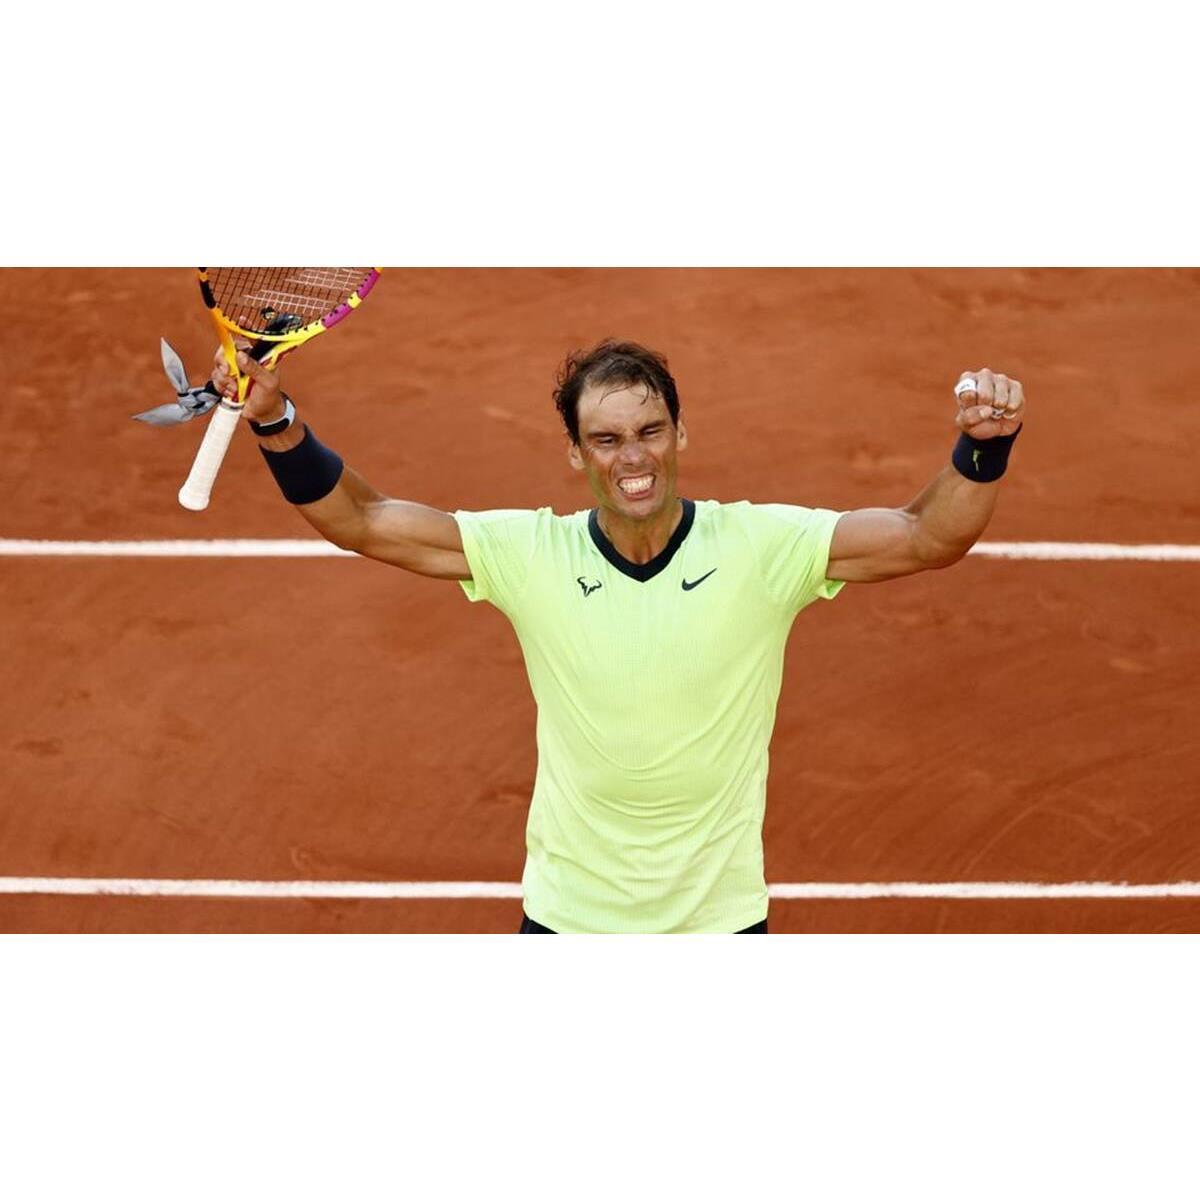 Nike Men`s Rafa Nadal Advantage Tennis Shirt CV2802-345